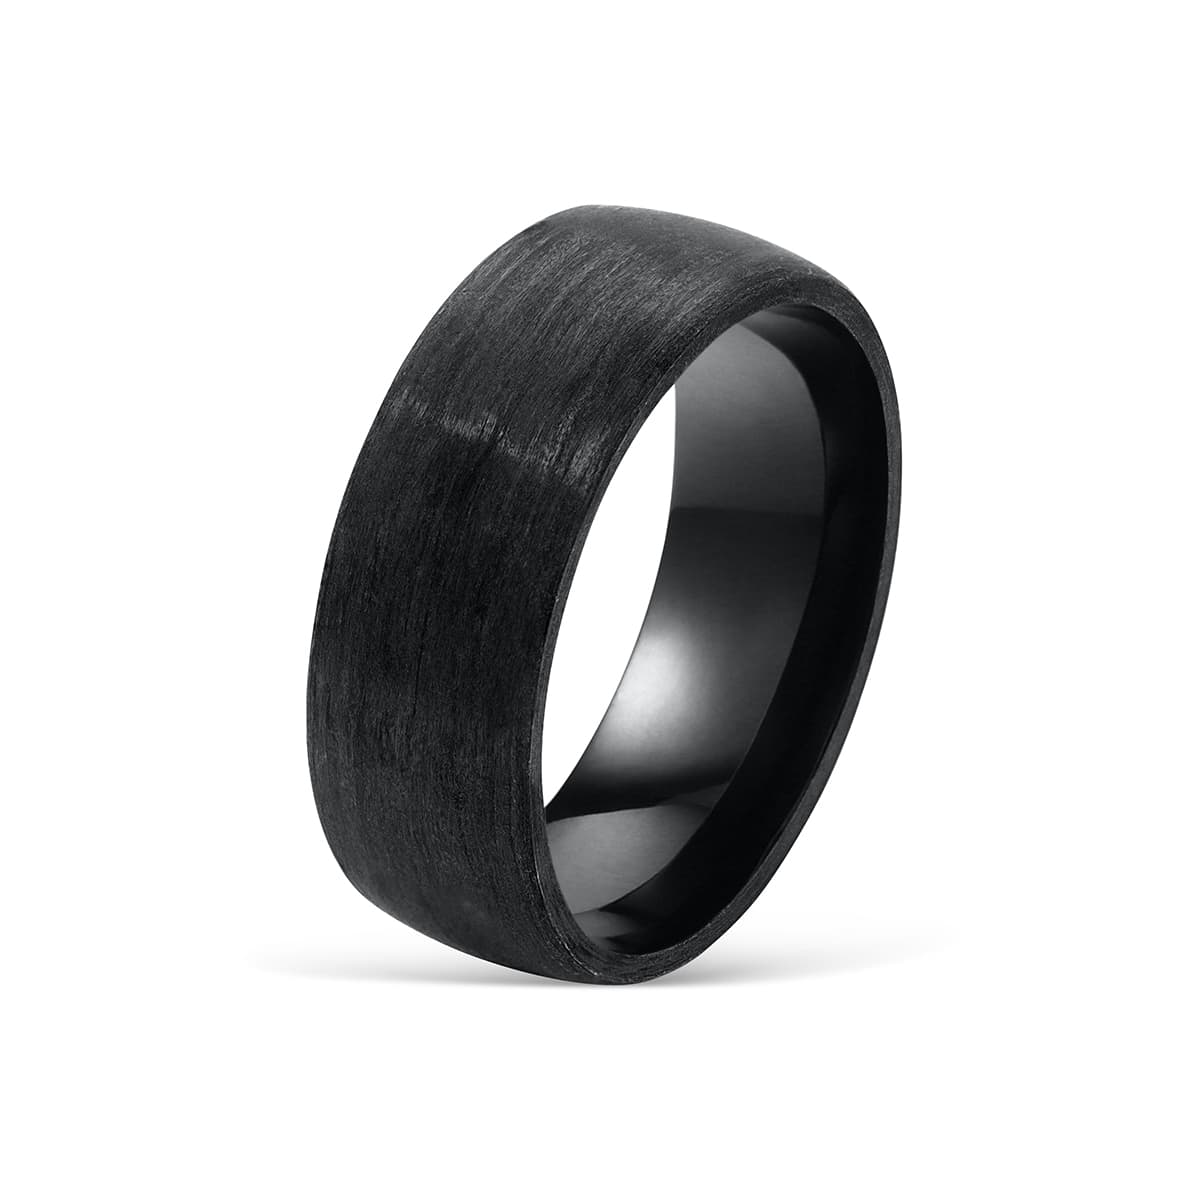 the stealth carbon fiber mens wedding ring